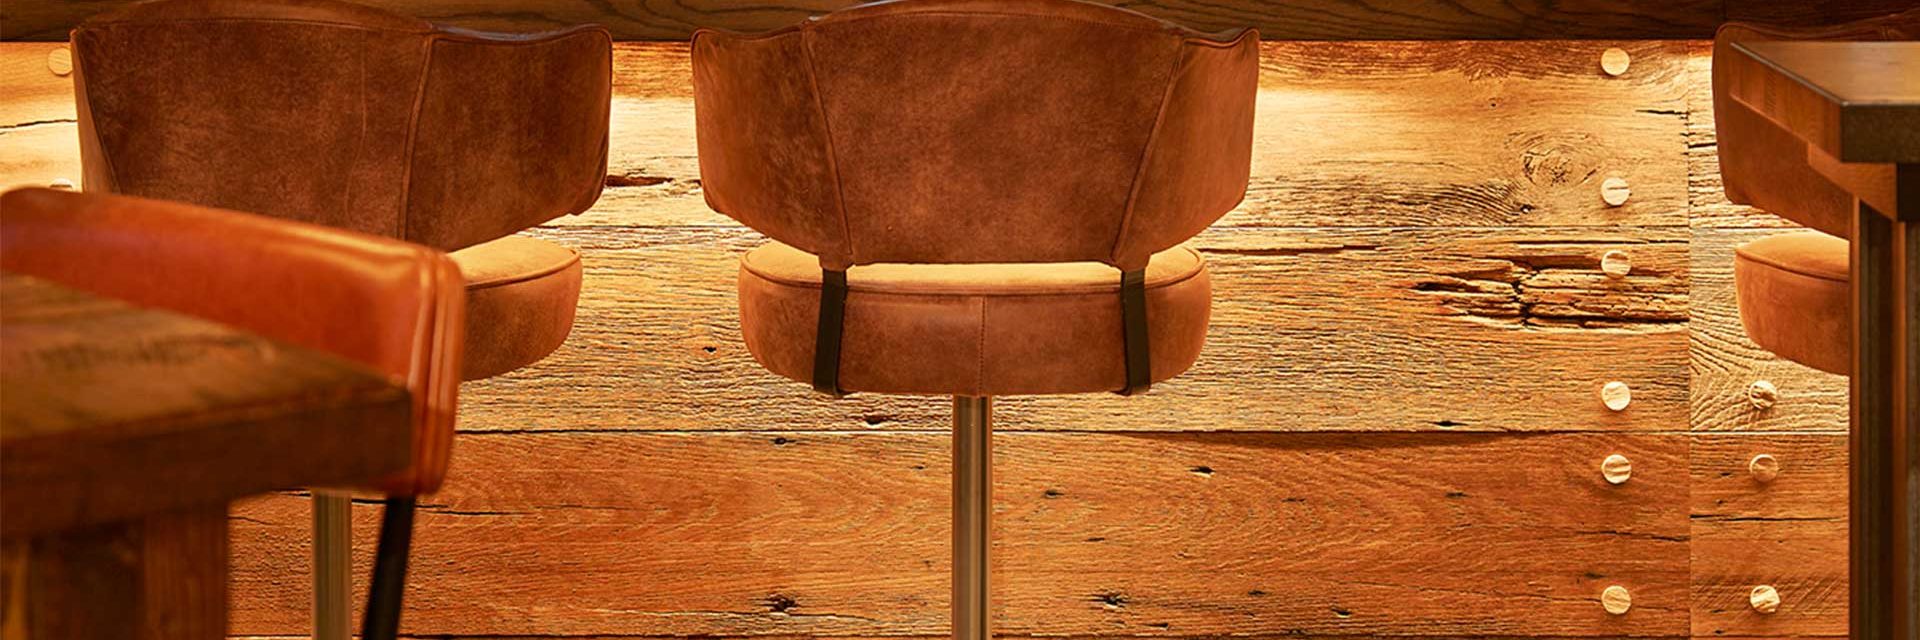 brown bar stool with metal base